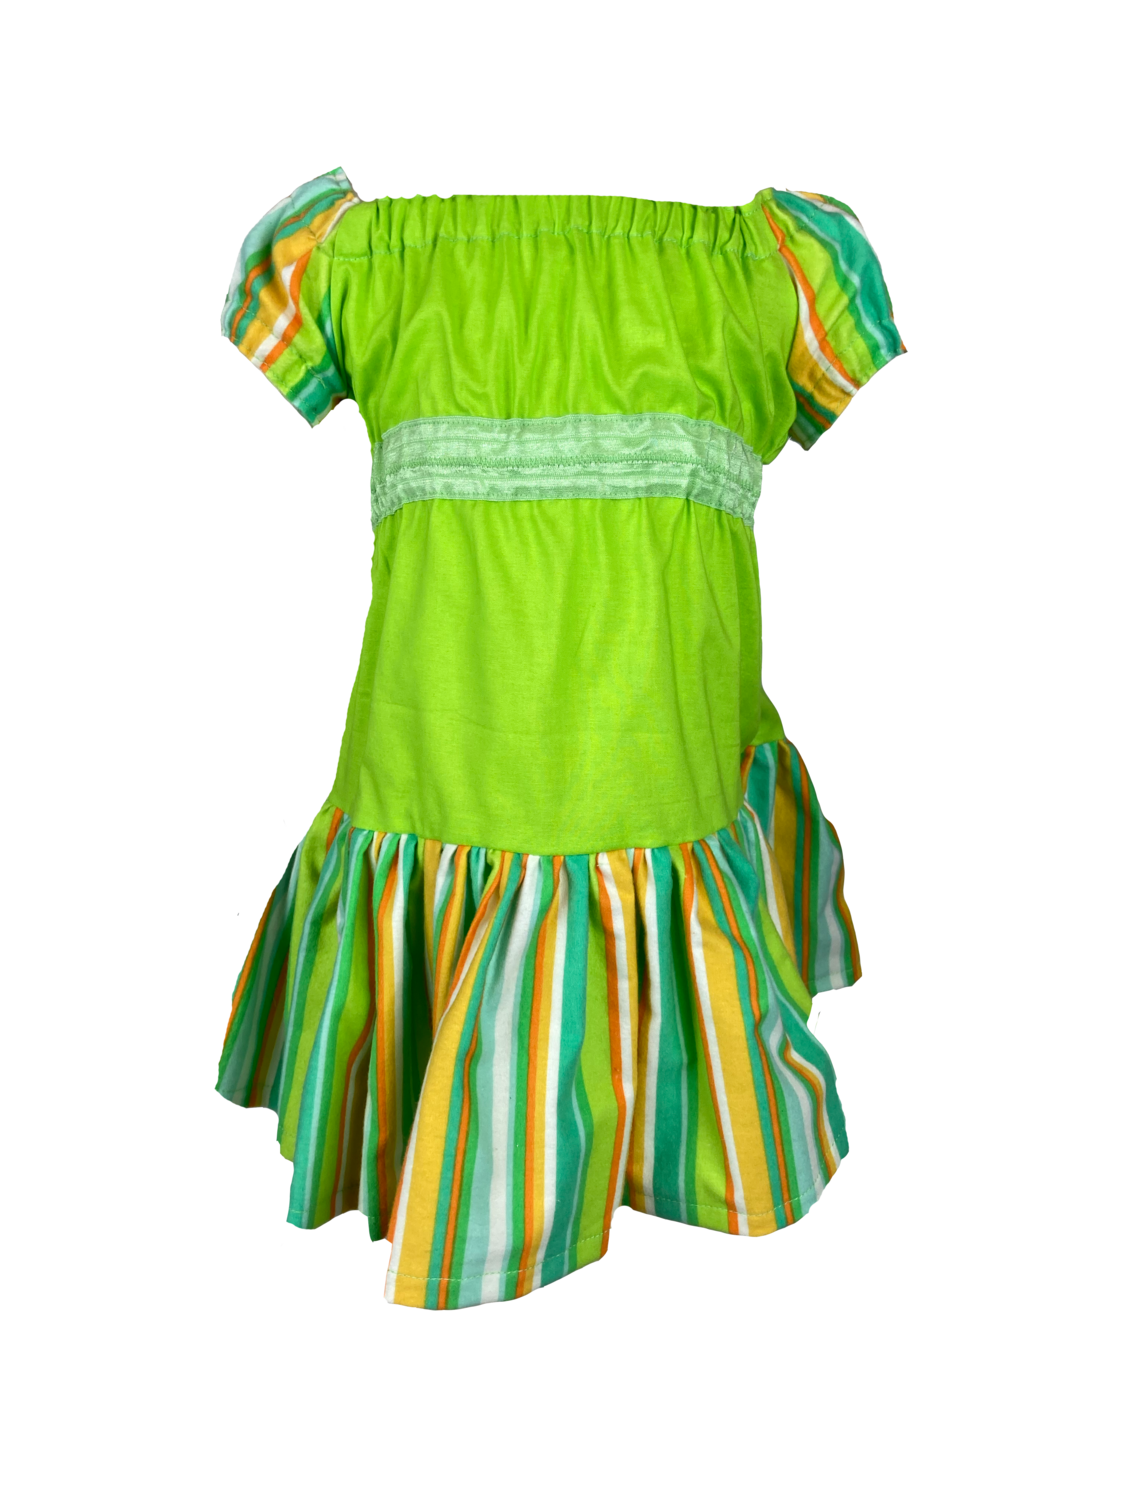 Green Spring Dress (Size 18-24 M)